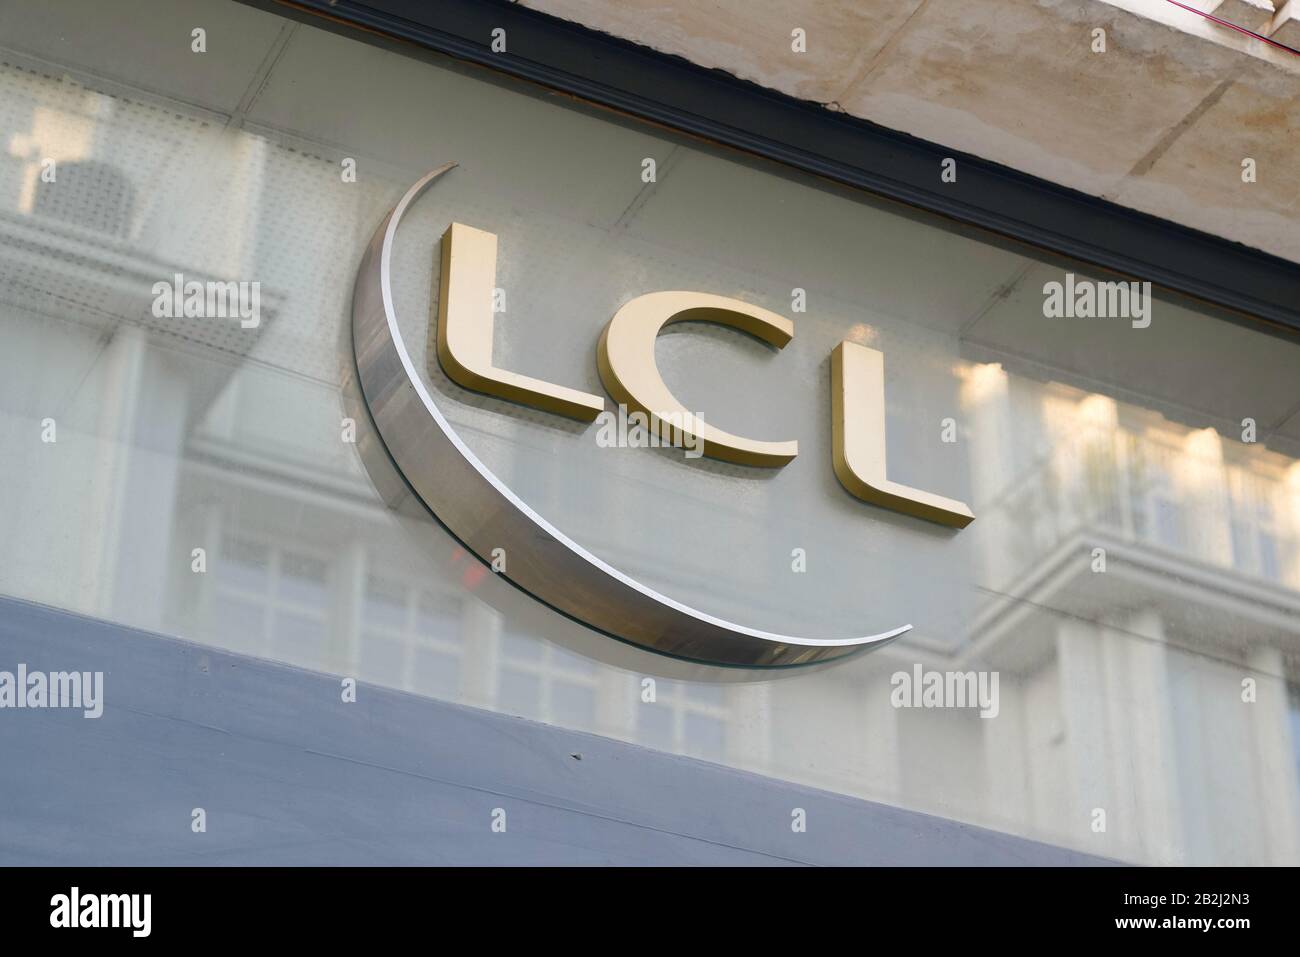 Bordeaux , Aquitaine / France - 01 15 2020 : lcl logo sign le credit Lyonnais french bank signage store office Stock Photo